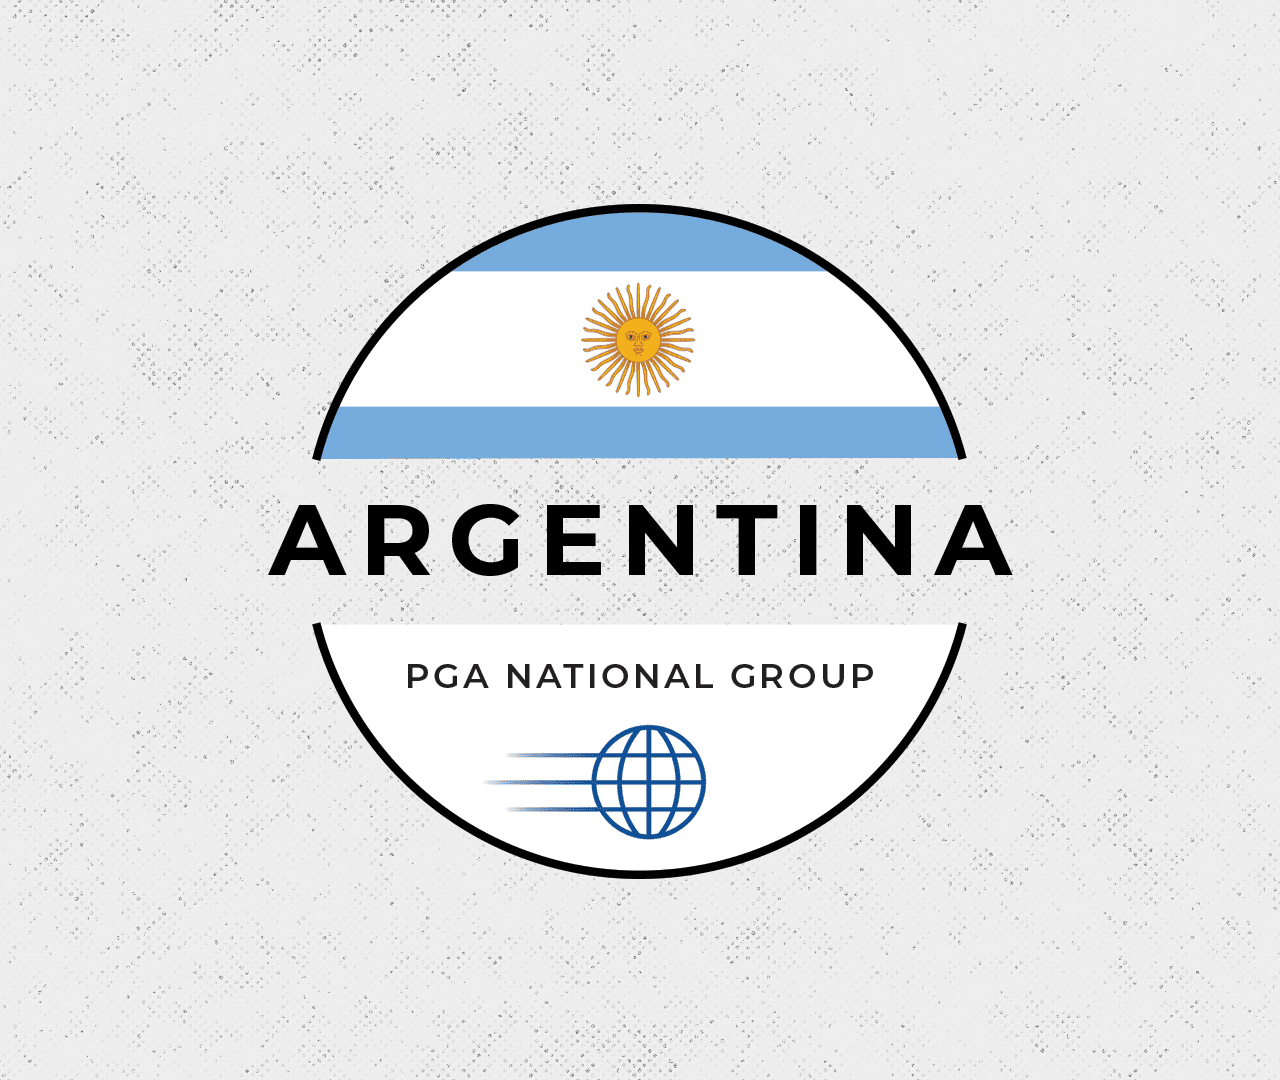 Argentina National Group